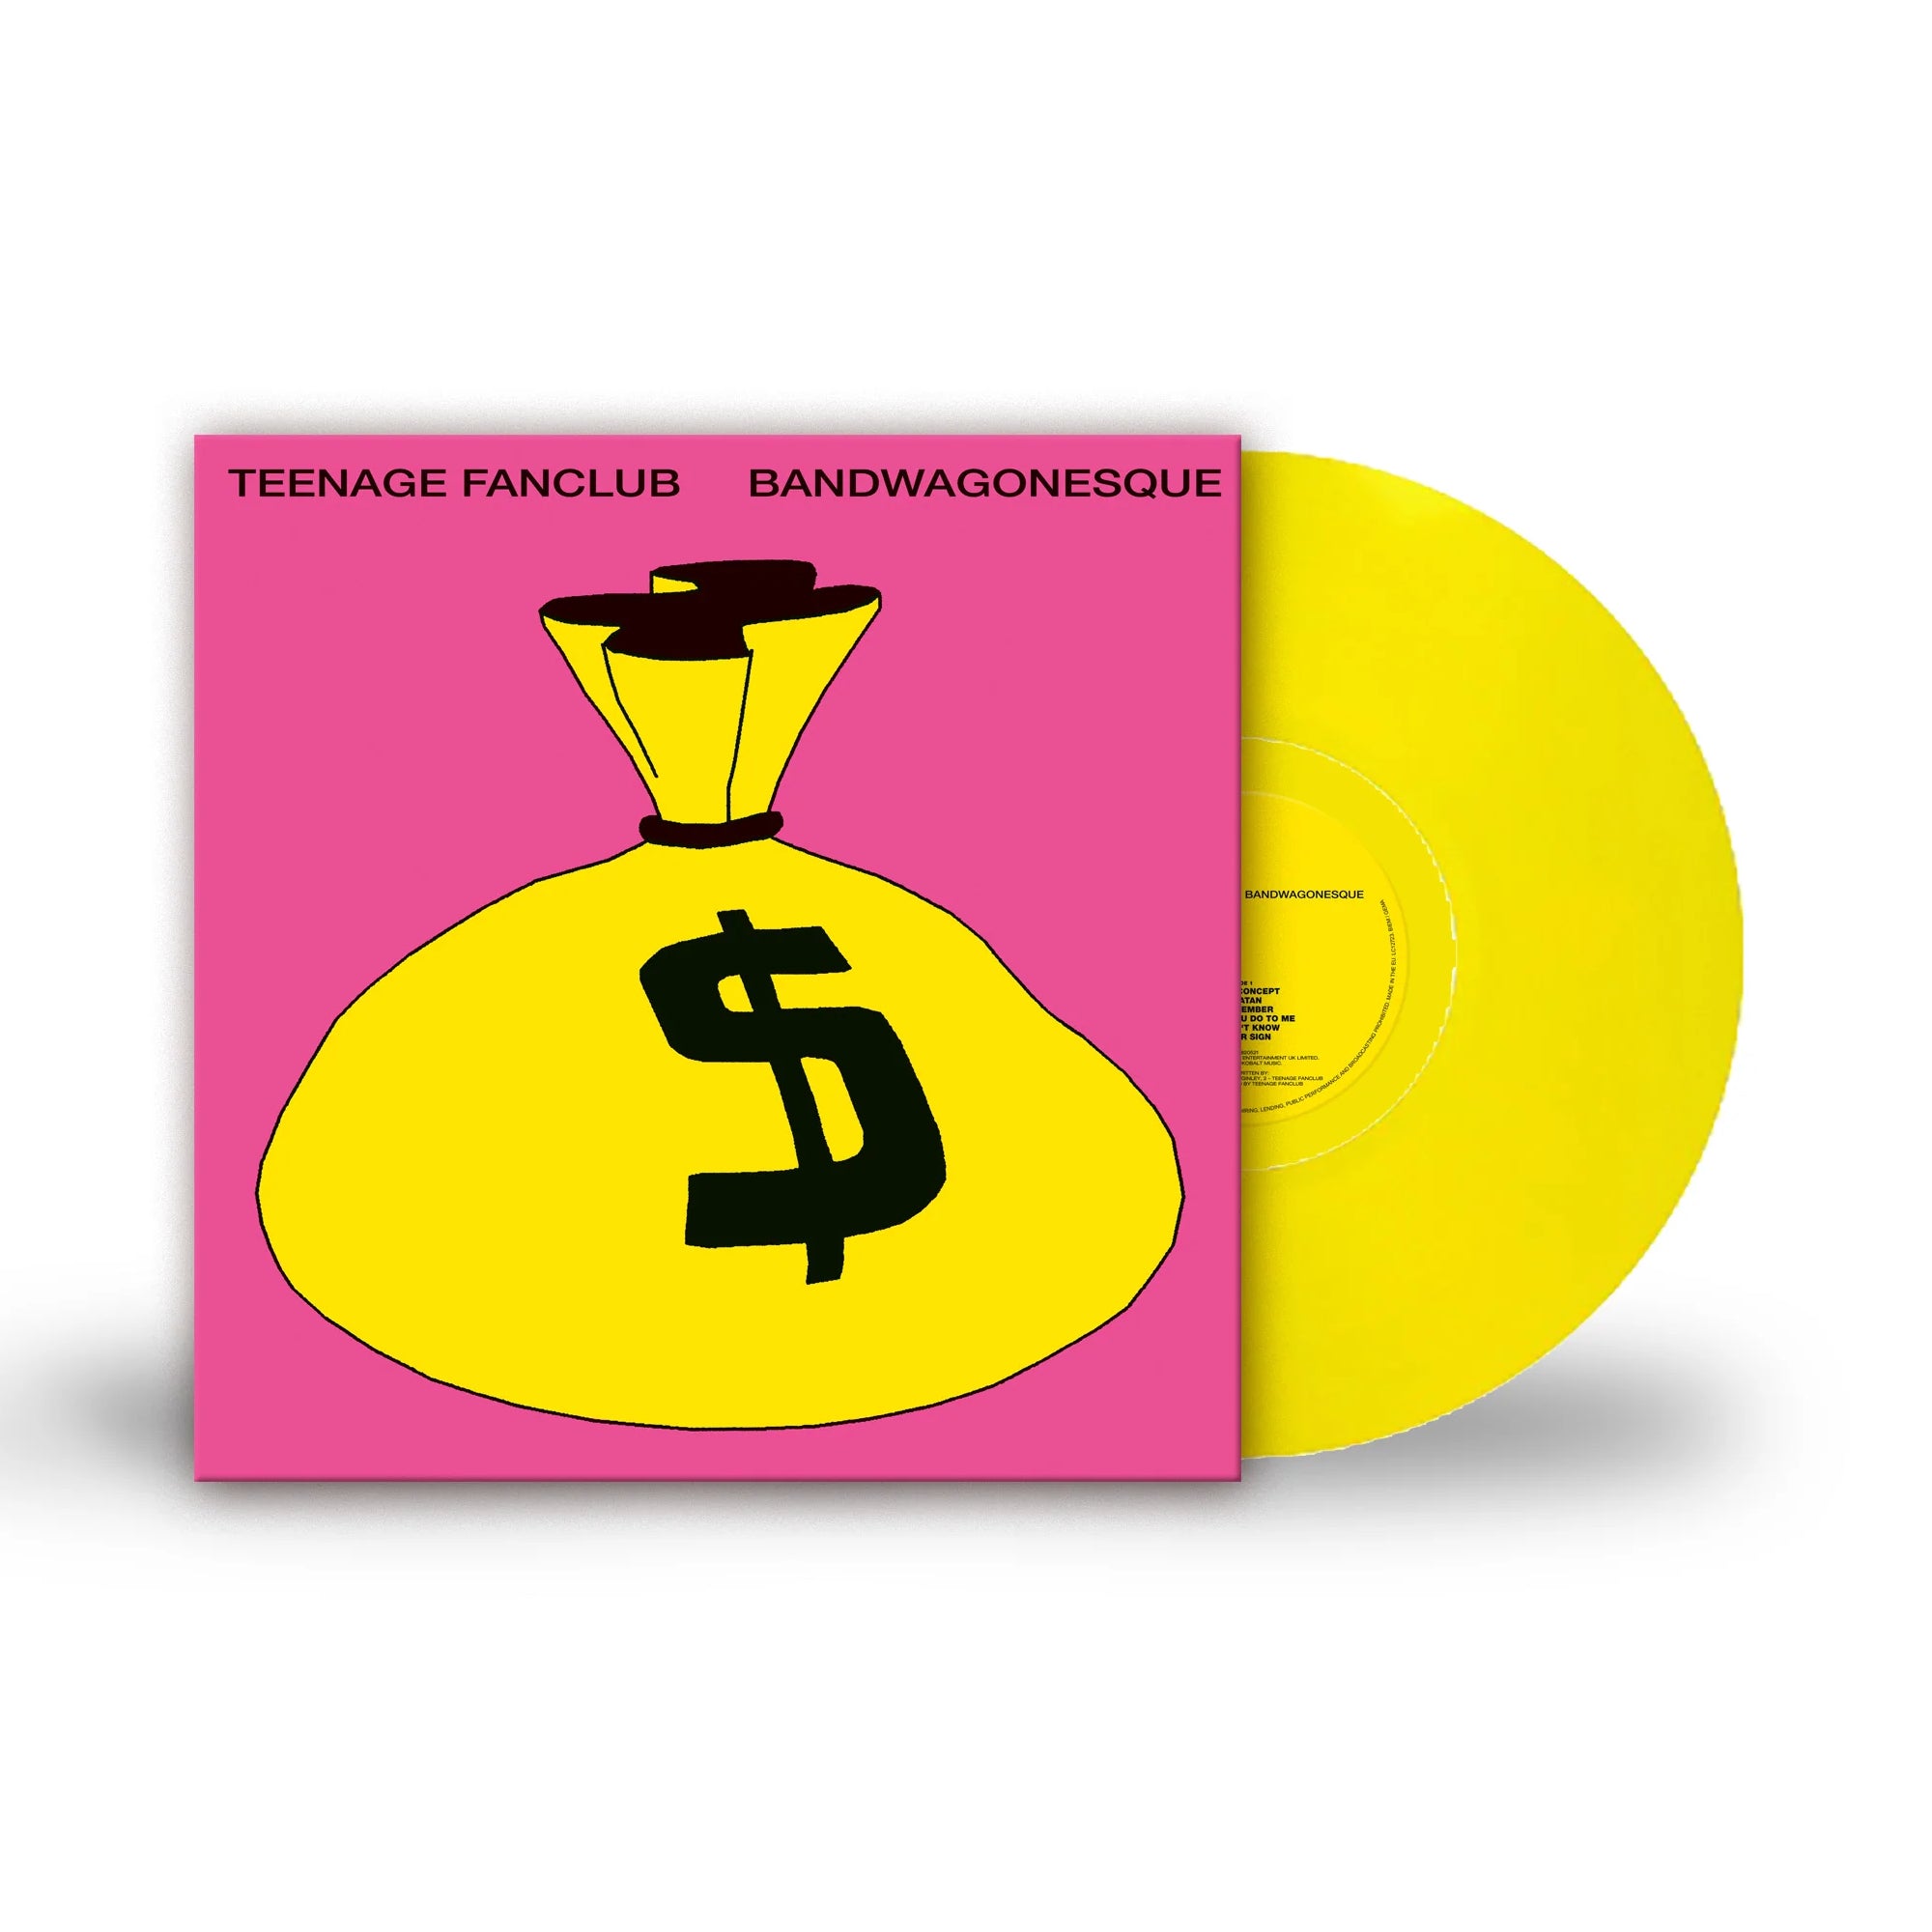 TEENAGE FANCLUB - Bandwagonesque (NAD 2023) - LP - Transparent Yellow Vinyl [OCT 14]